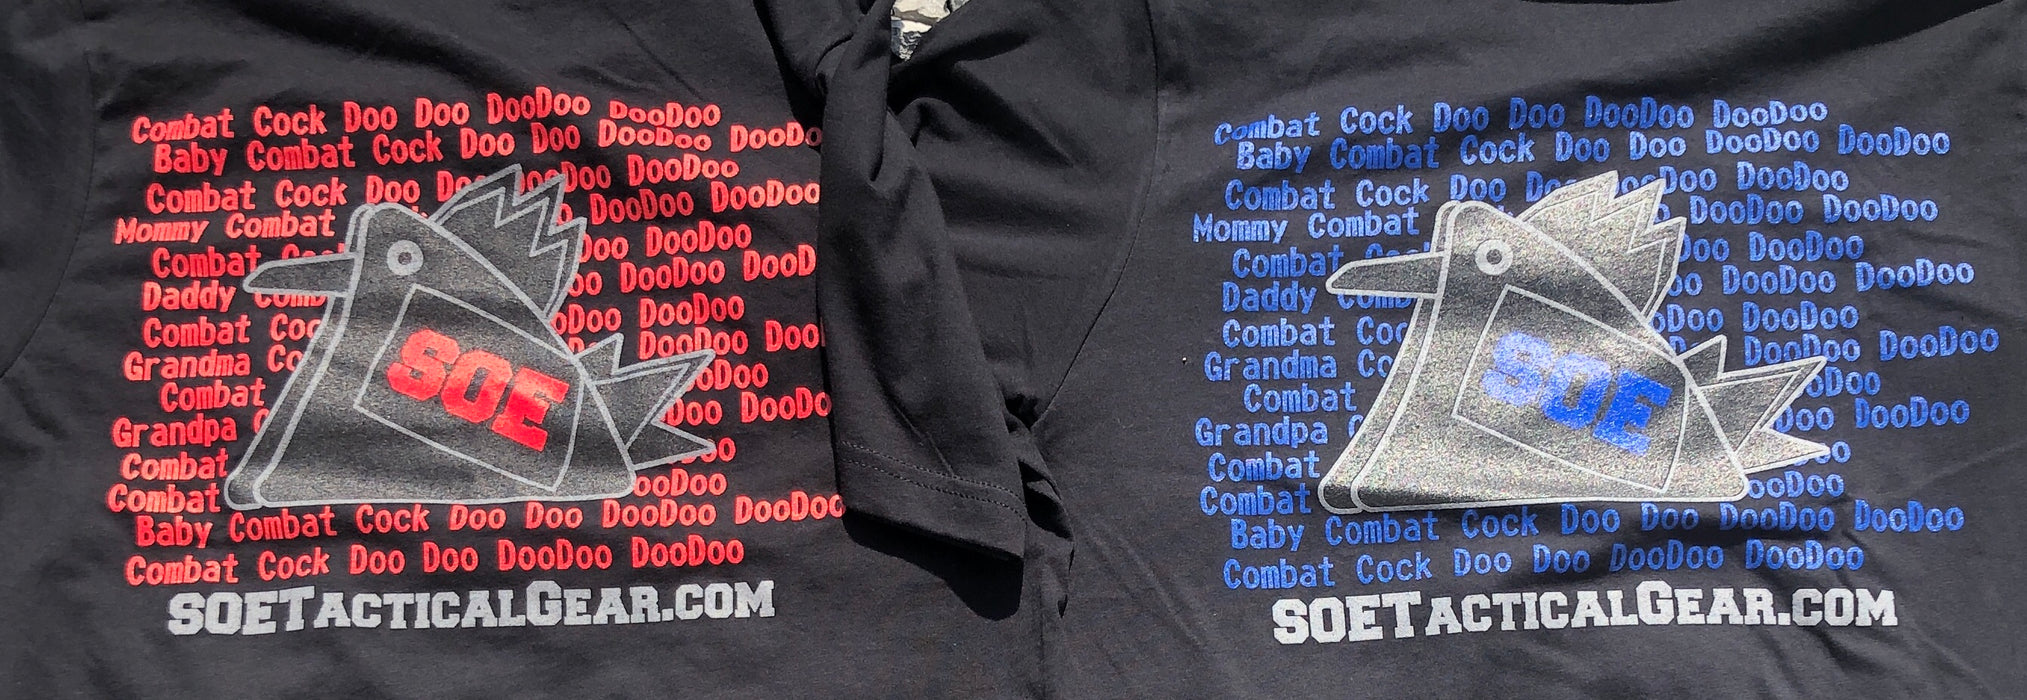 Combat Cock DoDoDoDo T Shirt